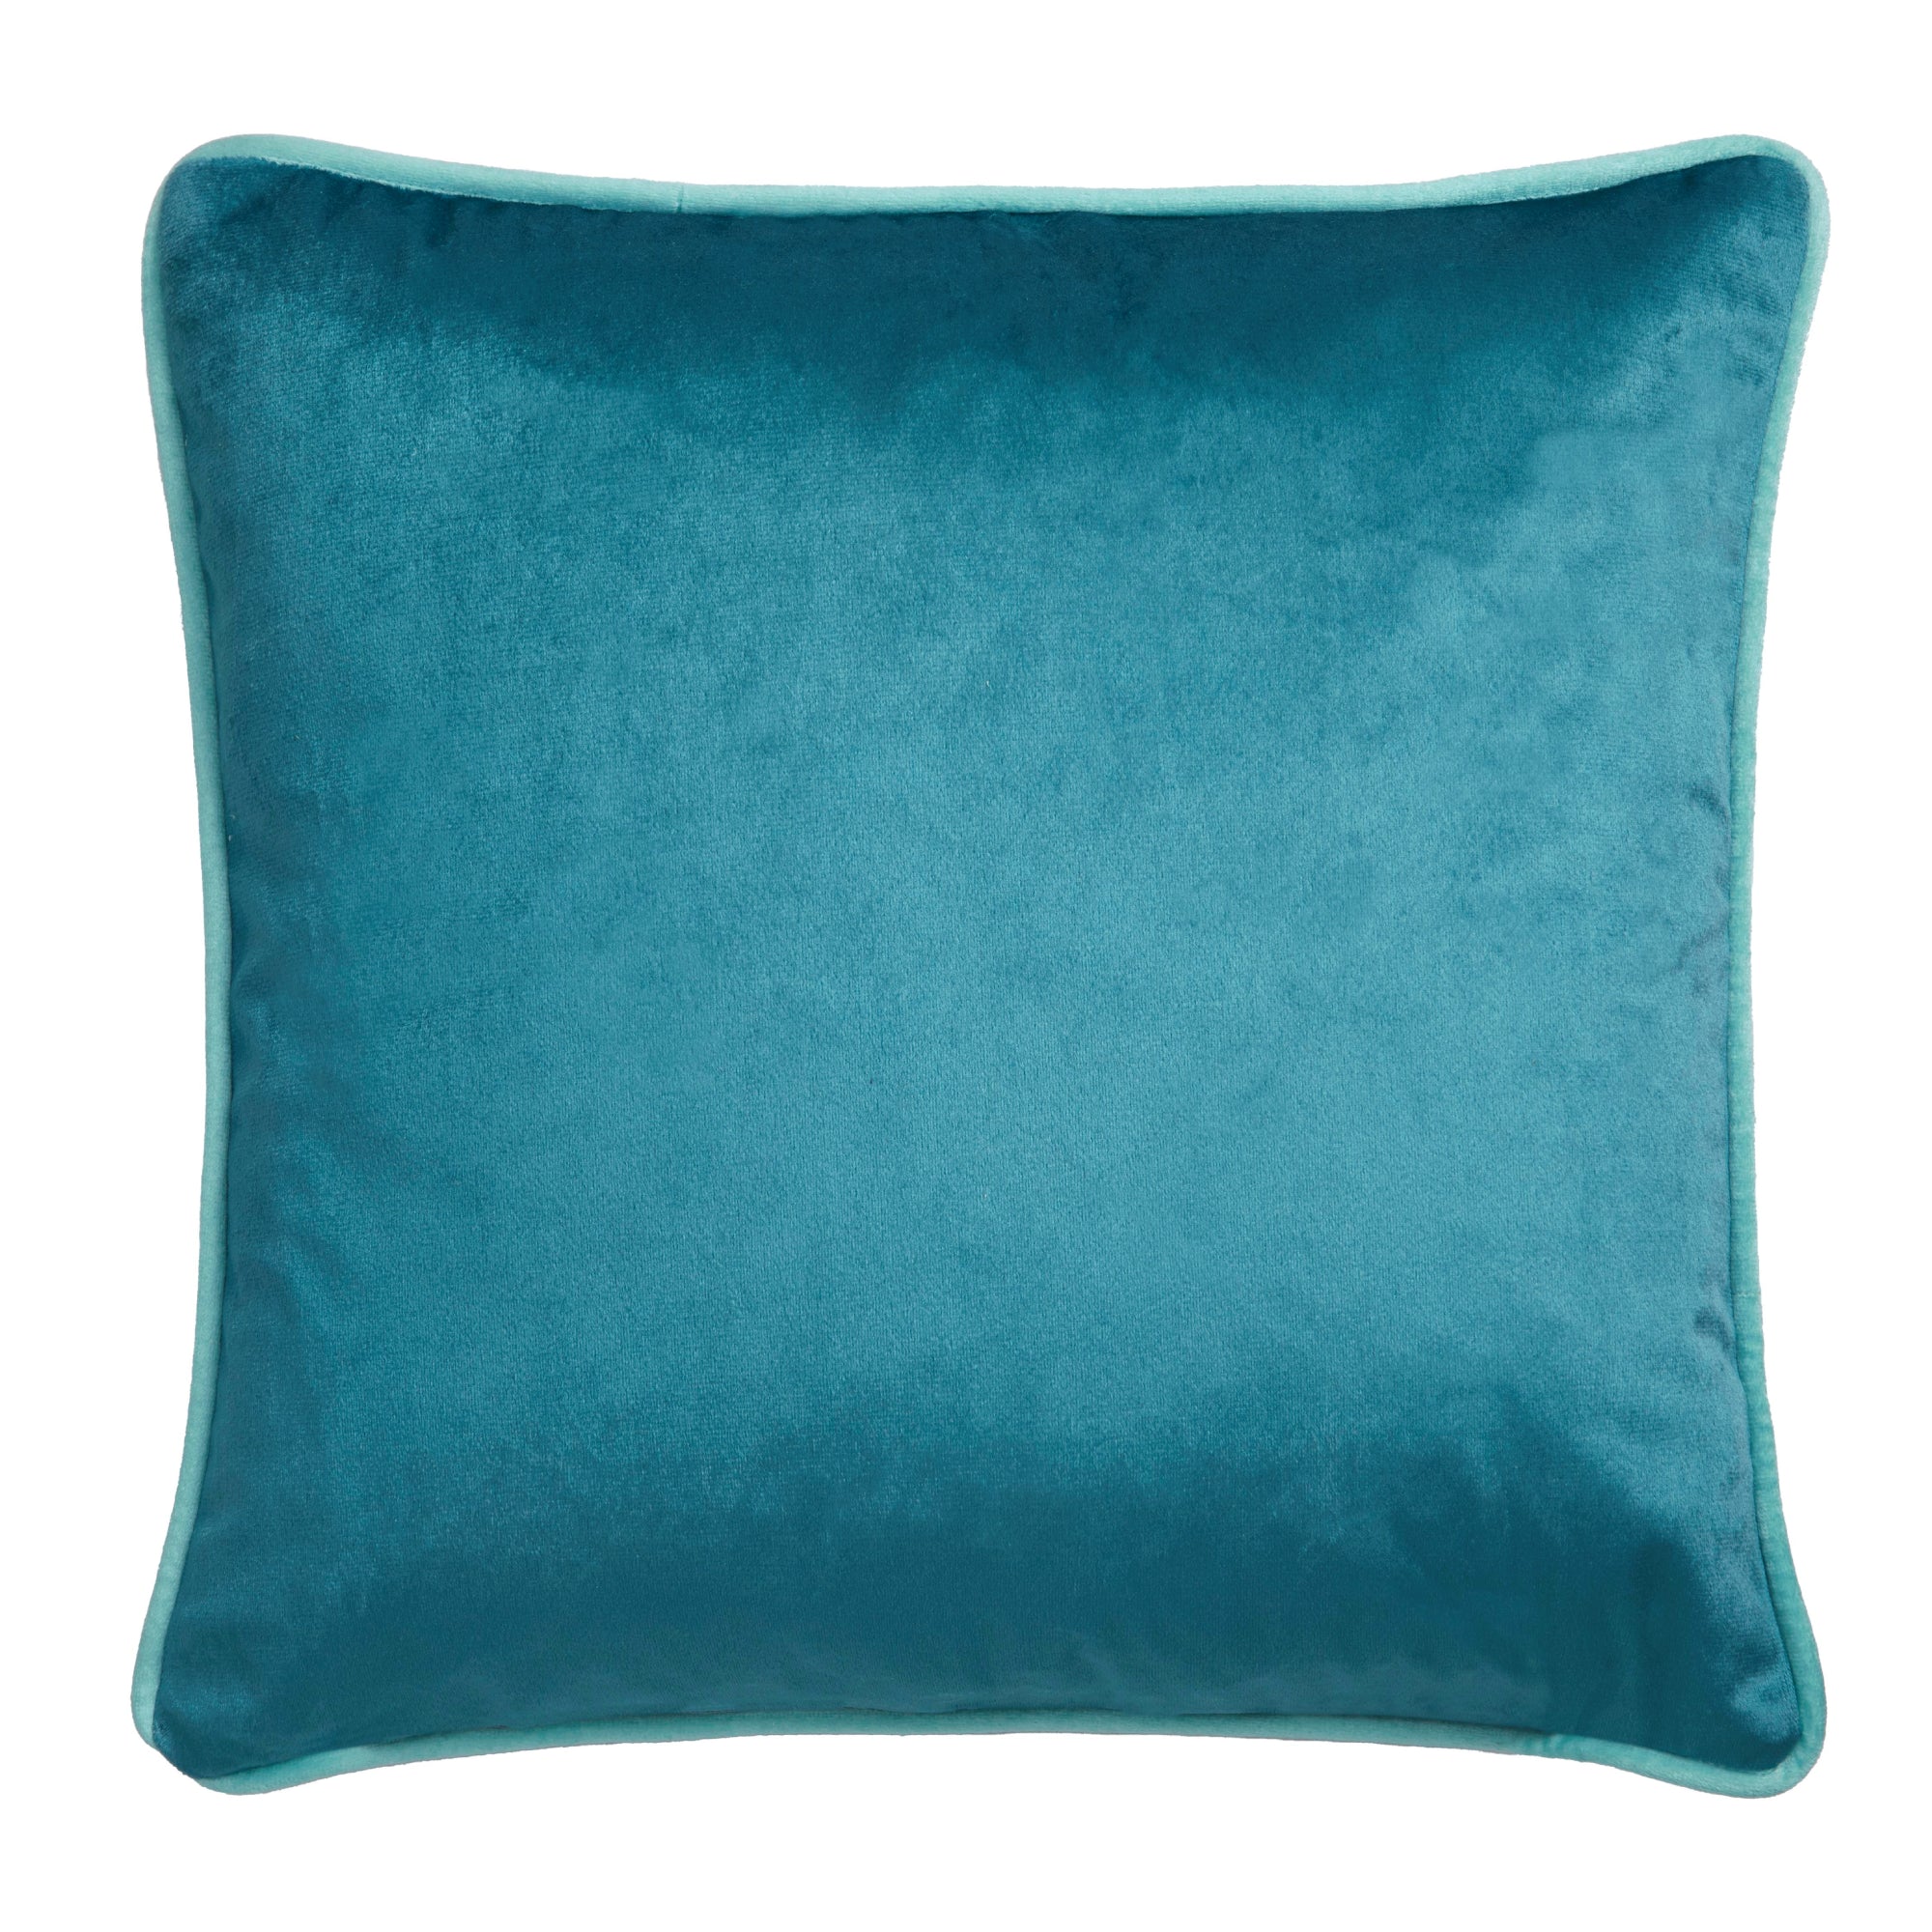 Birdity Absurdity Filled Cushion by Laurence Llewelyn-Bowen in Blue 43 x 43cm - Filled Cushion - Laurence Llewelyn-Bowen